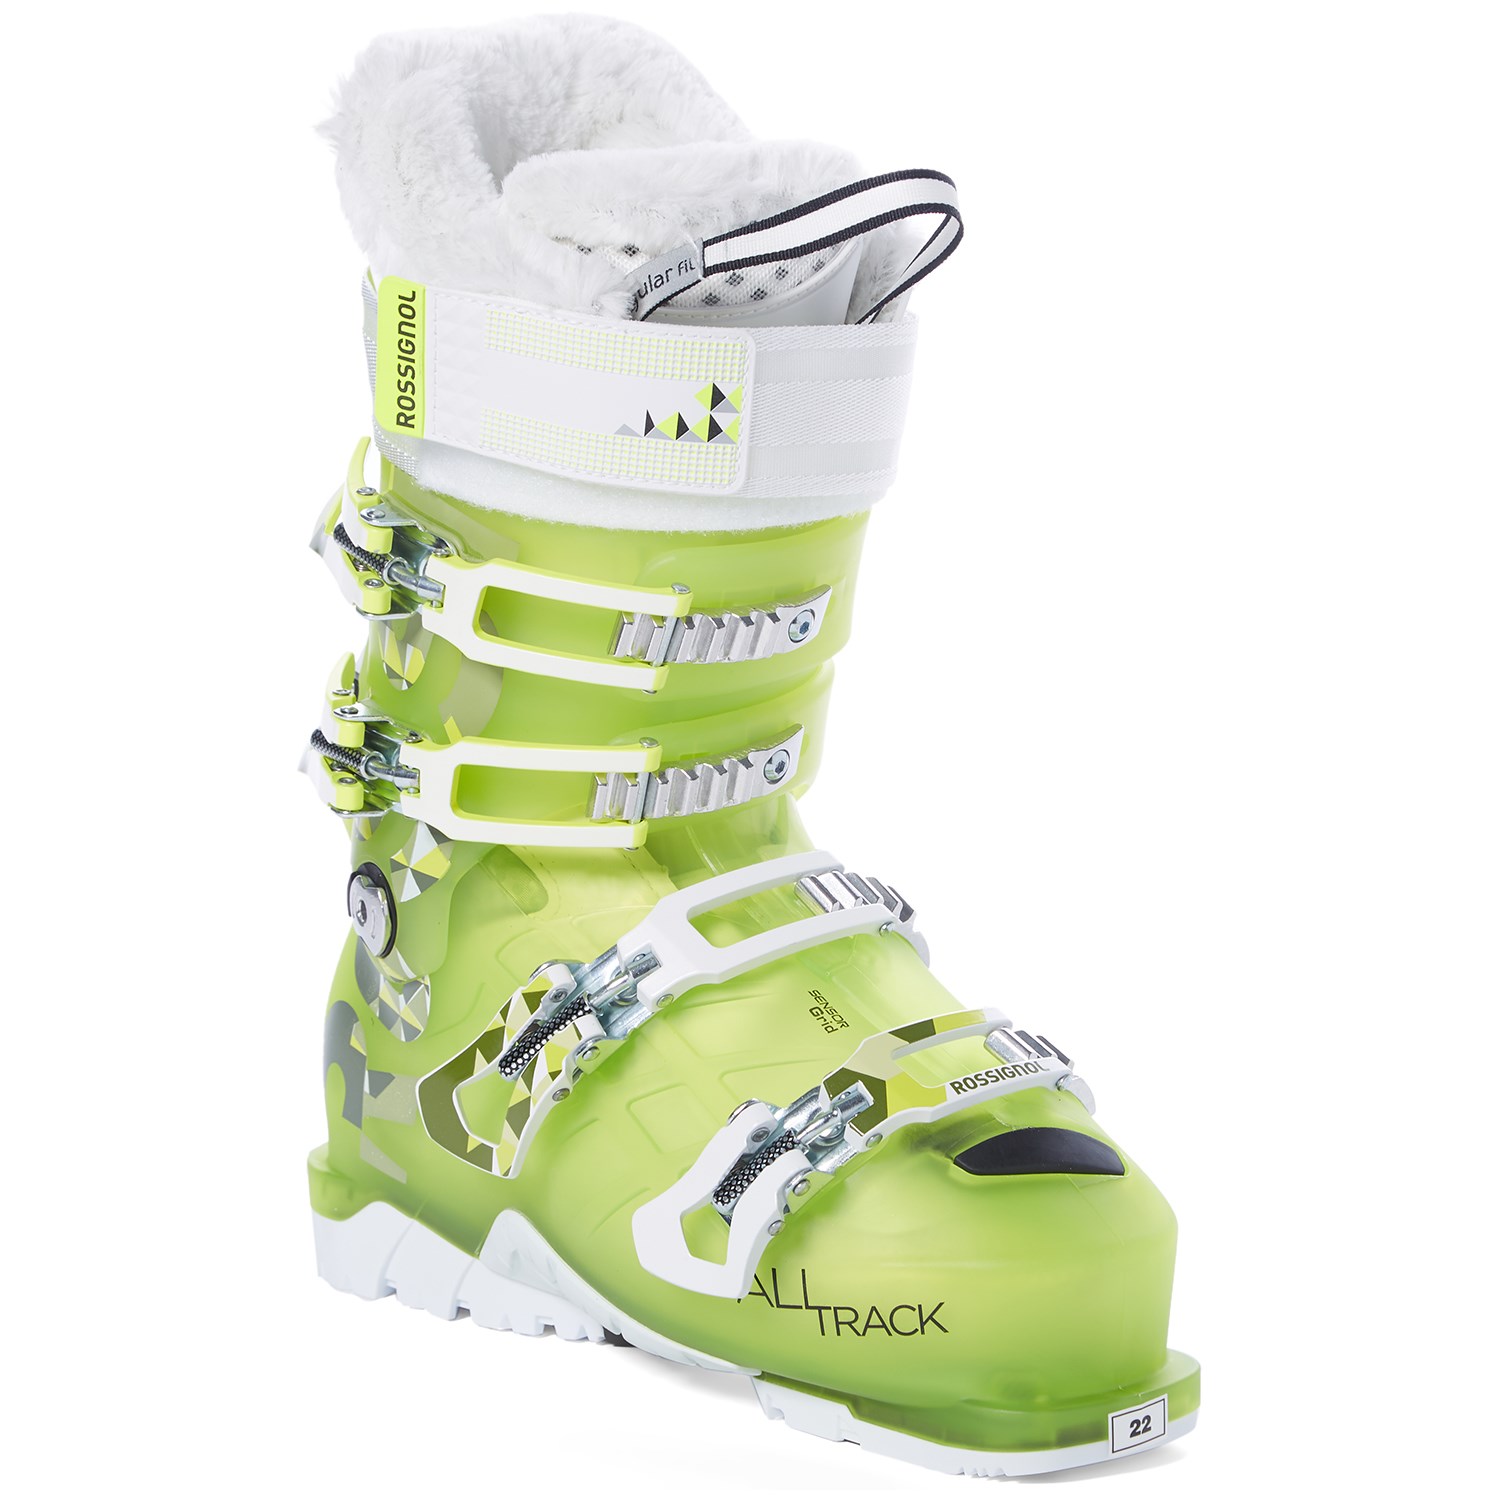 rossignol alltrack 7 ski boots